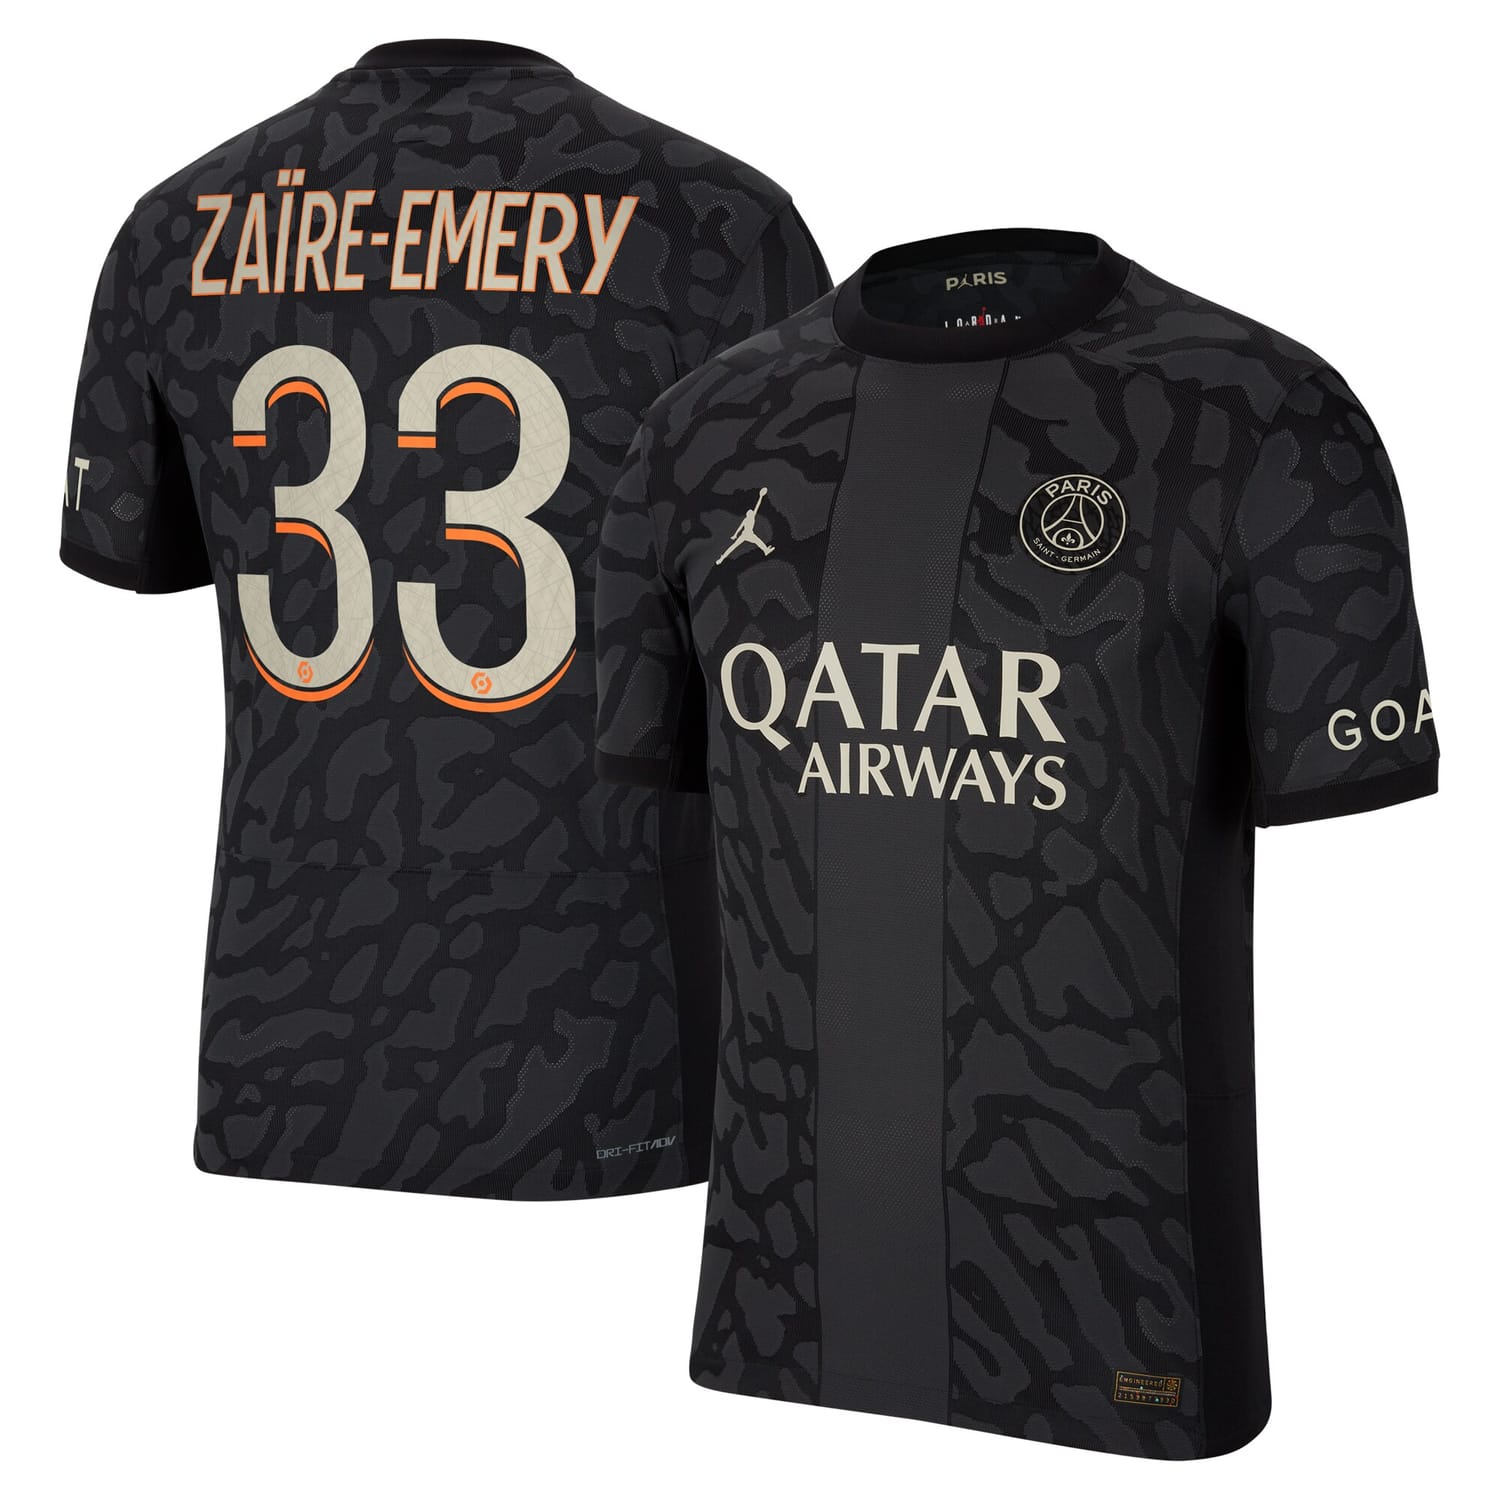 Ligue 1 Paris Saint-Germain Third Authentic Jersey Shirt 2023-24 player Warren Zaïre-Emery 33 printing for Men